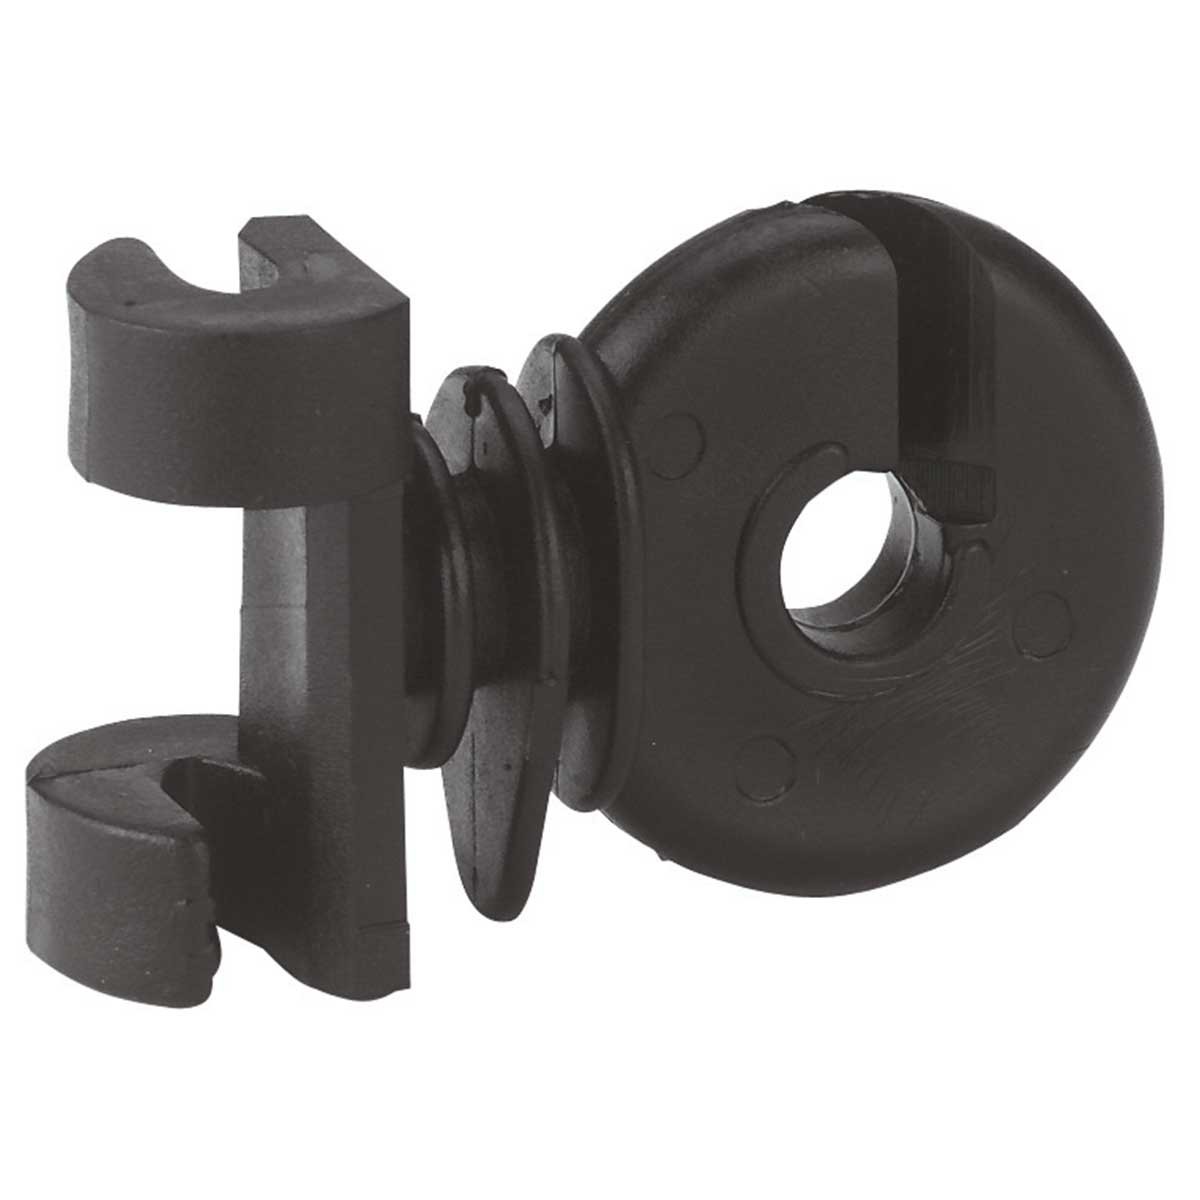 Spare insulator clip for oval steel post